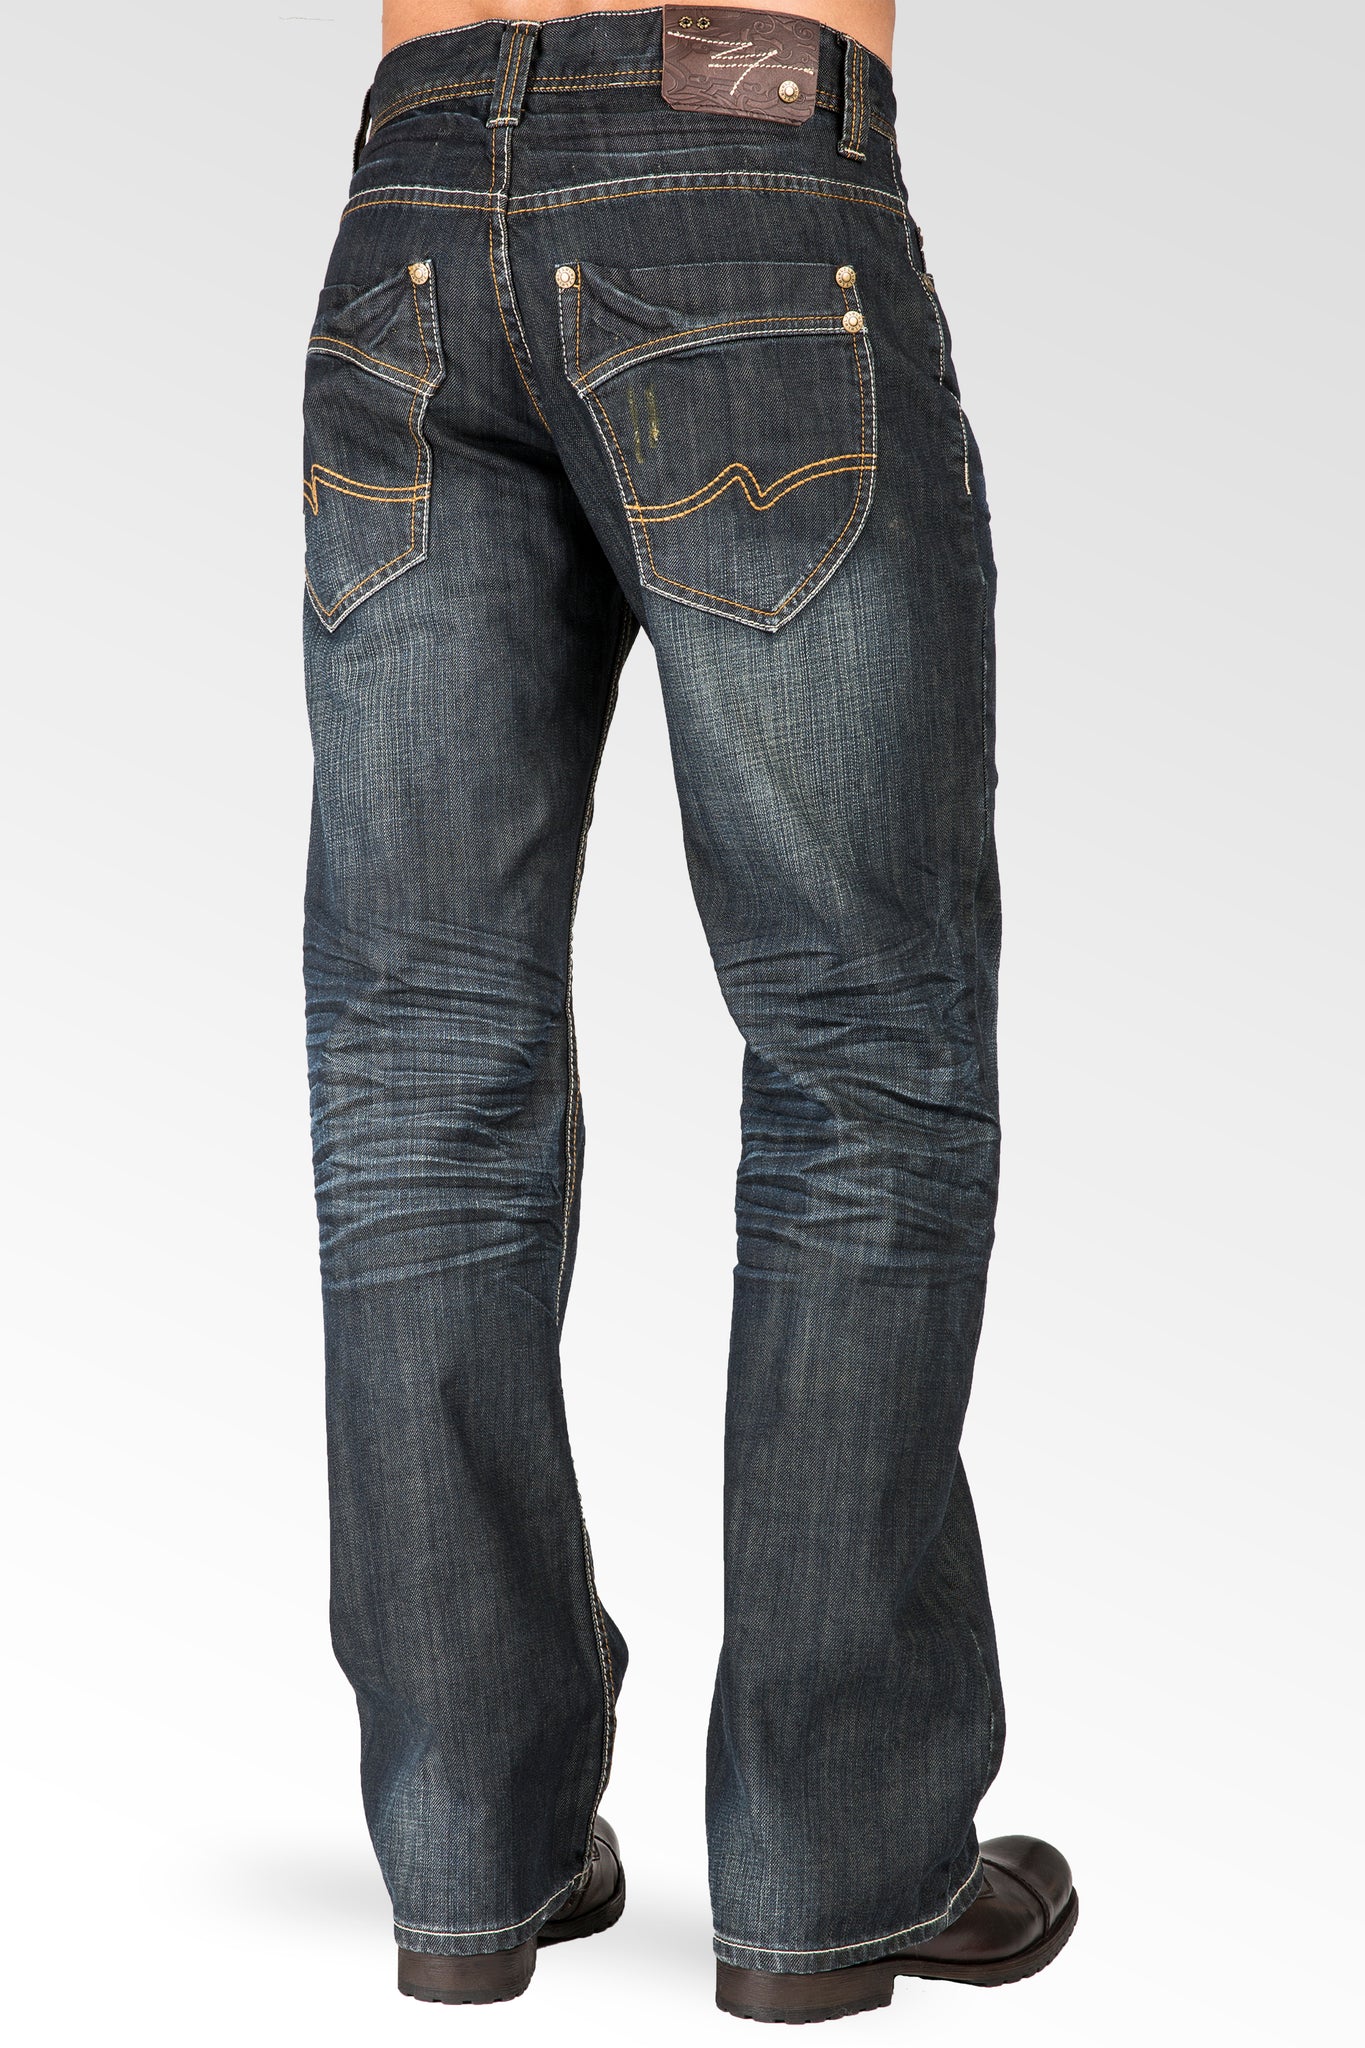 Midrise Relaxed Bootcut Vintage Dark Hand Rub Premium Denim 5 Pocket Jeans Whiskering